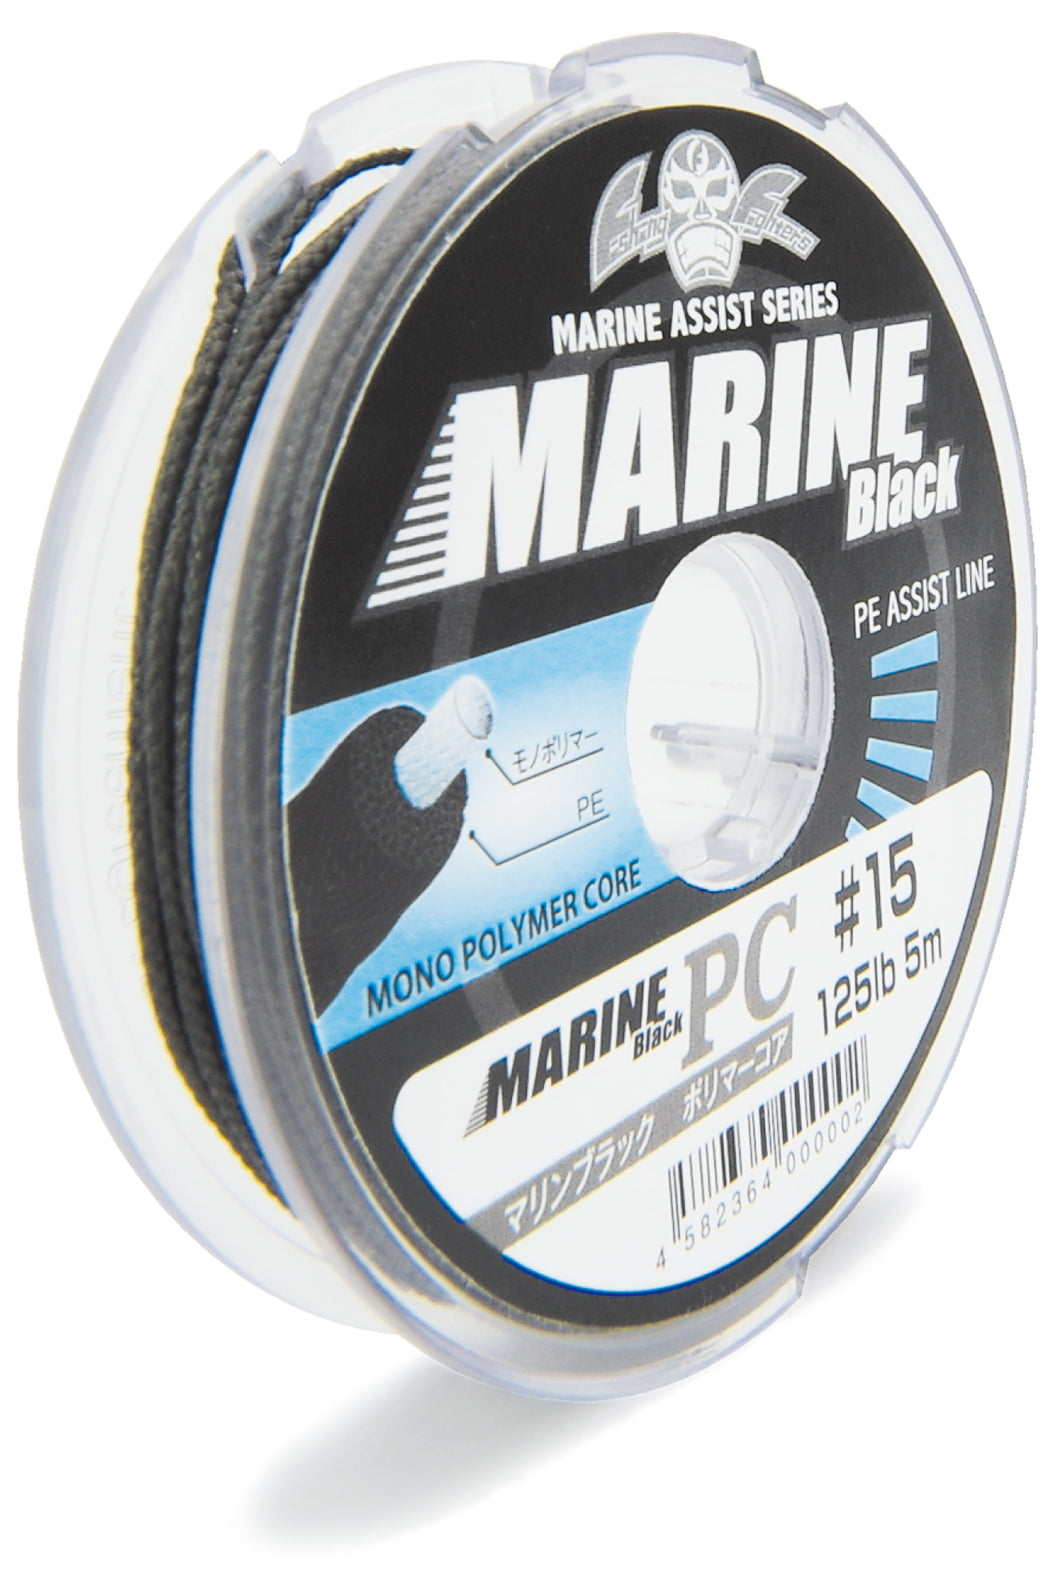 Marine black polymer core MARINE POLYMERCORE